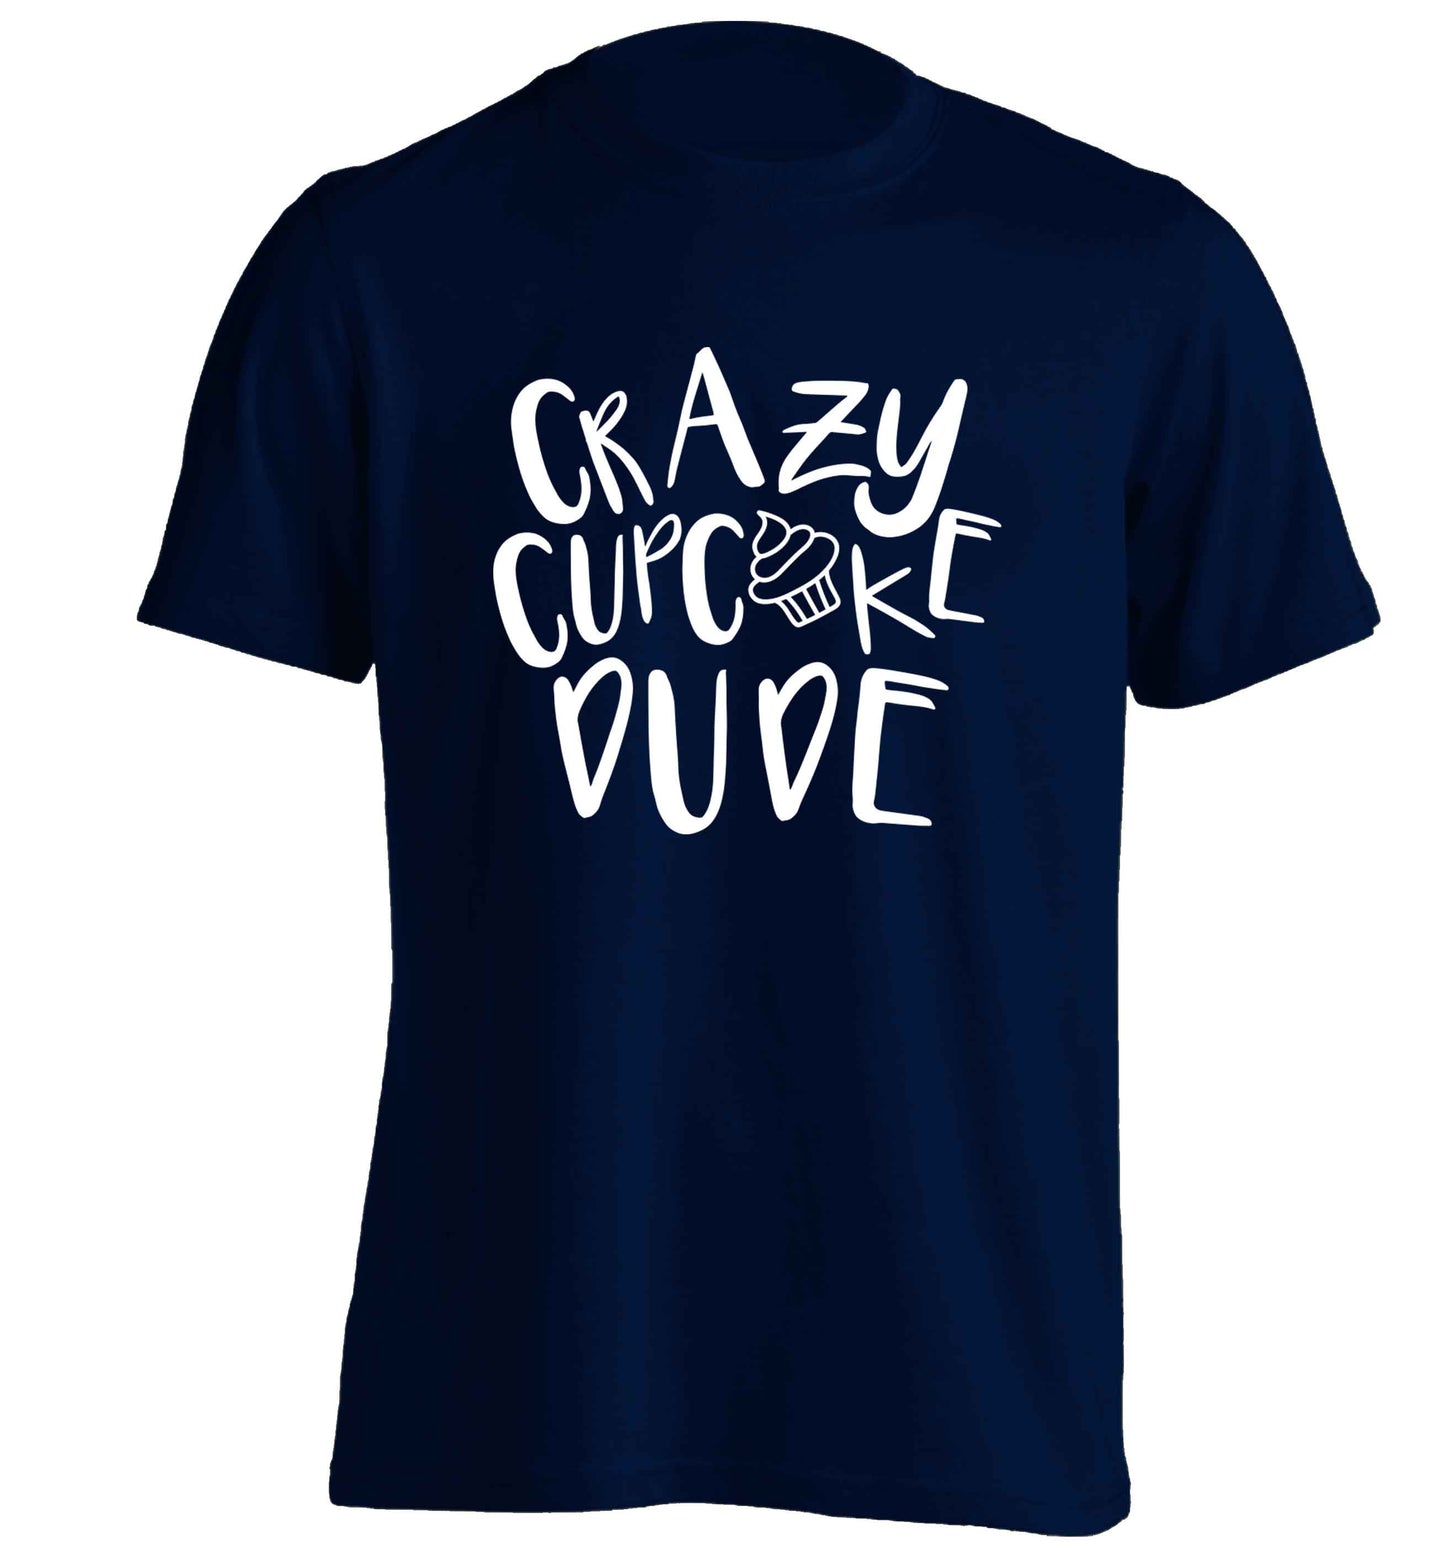 Crazy cupcake dude adults unisex navy Tshirt 2XL